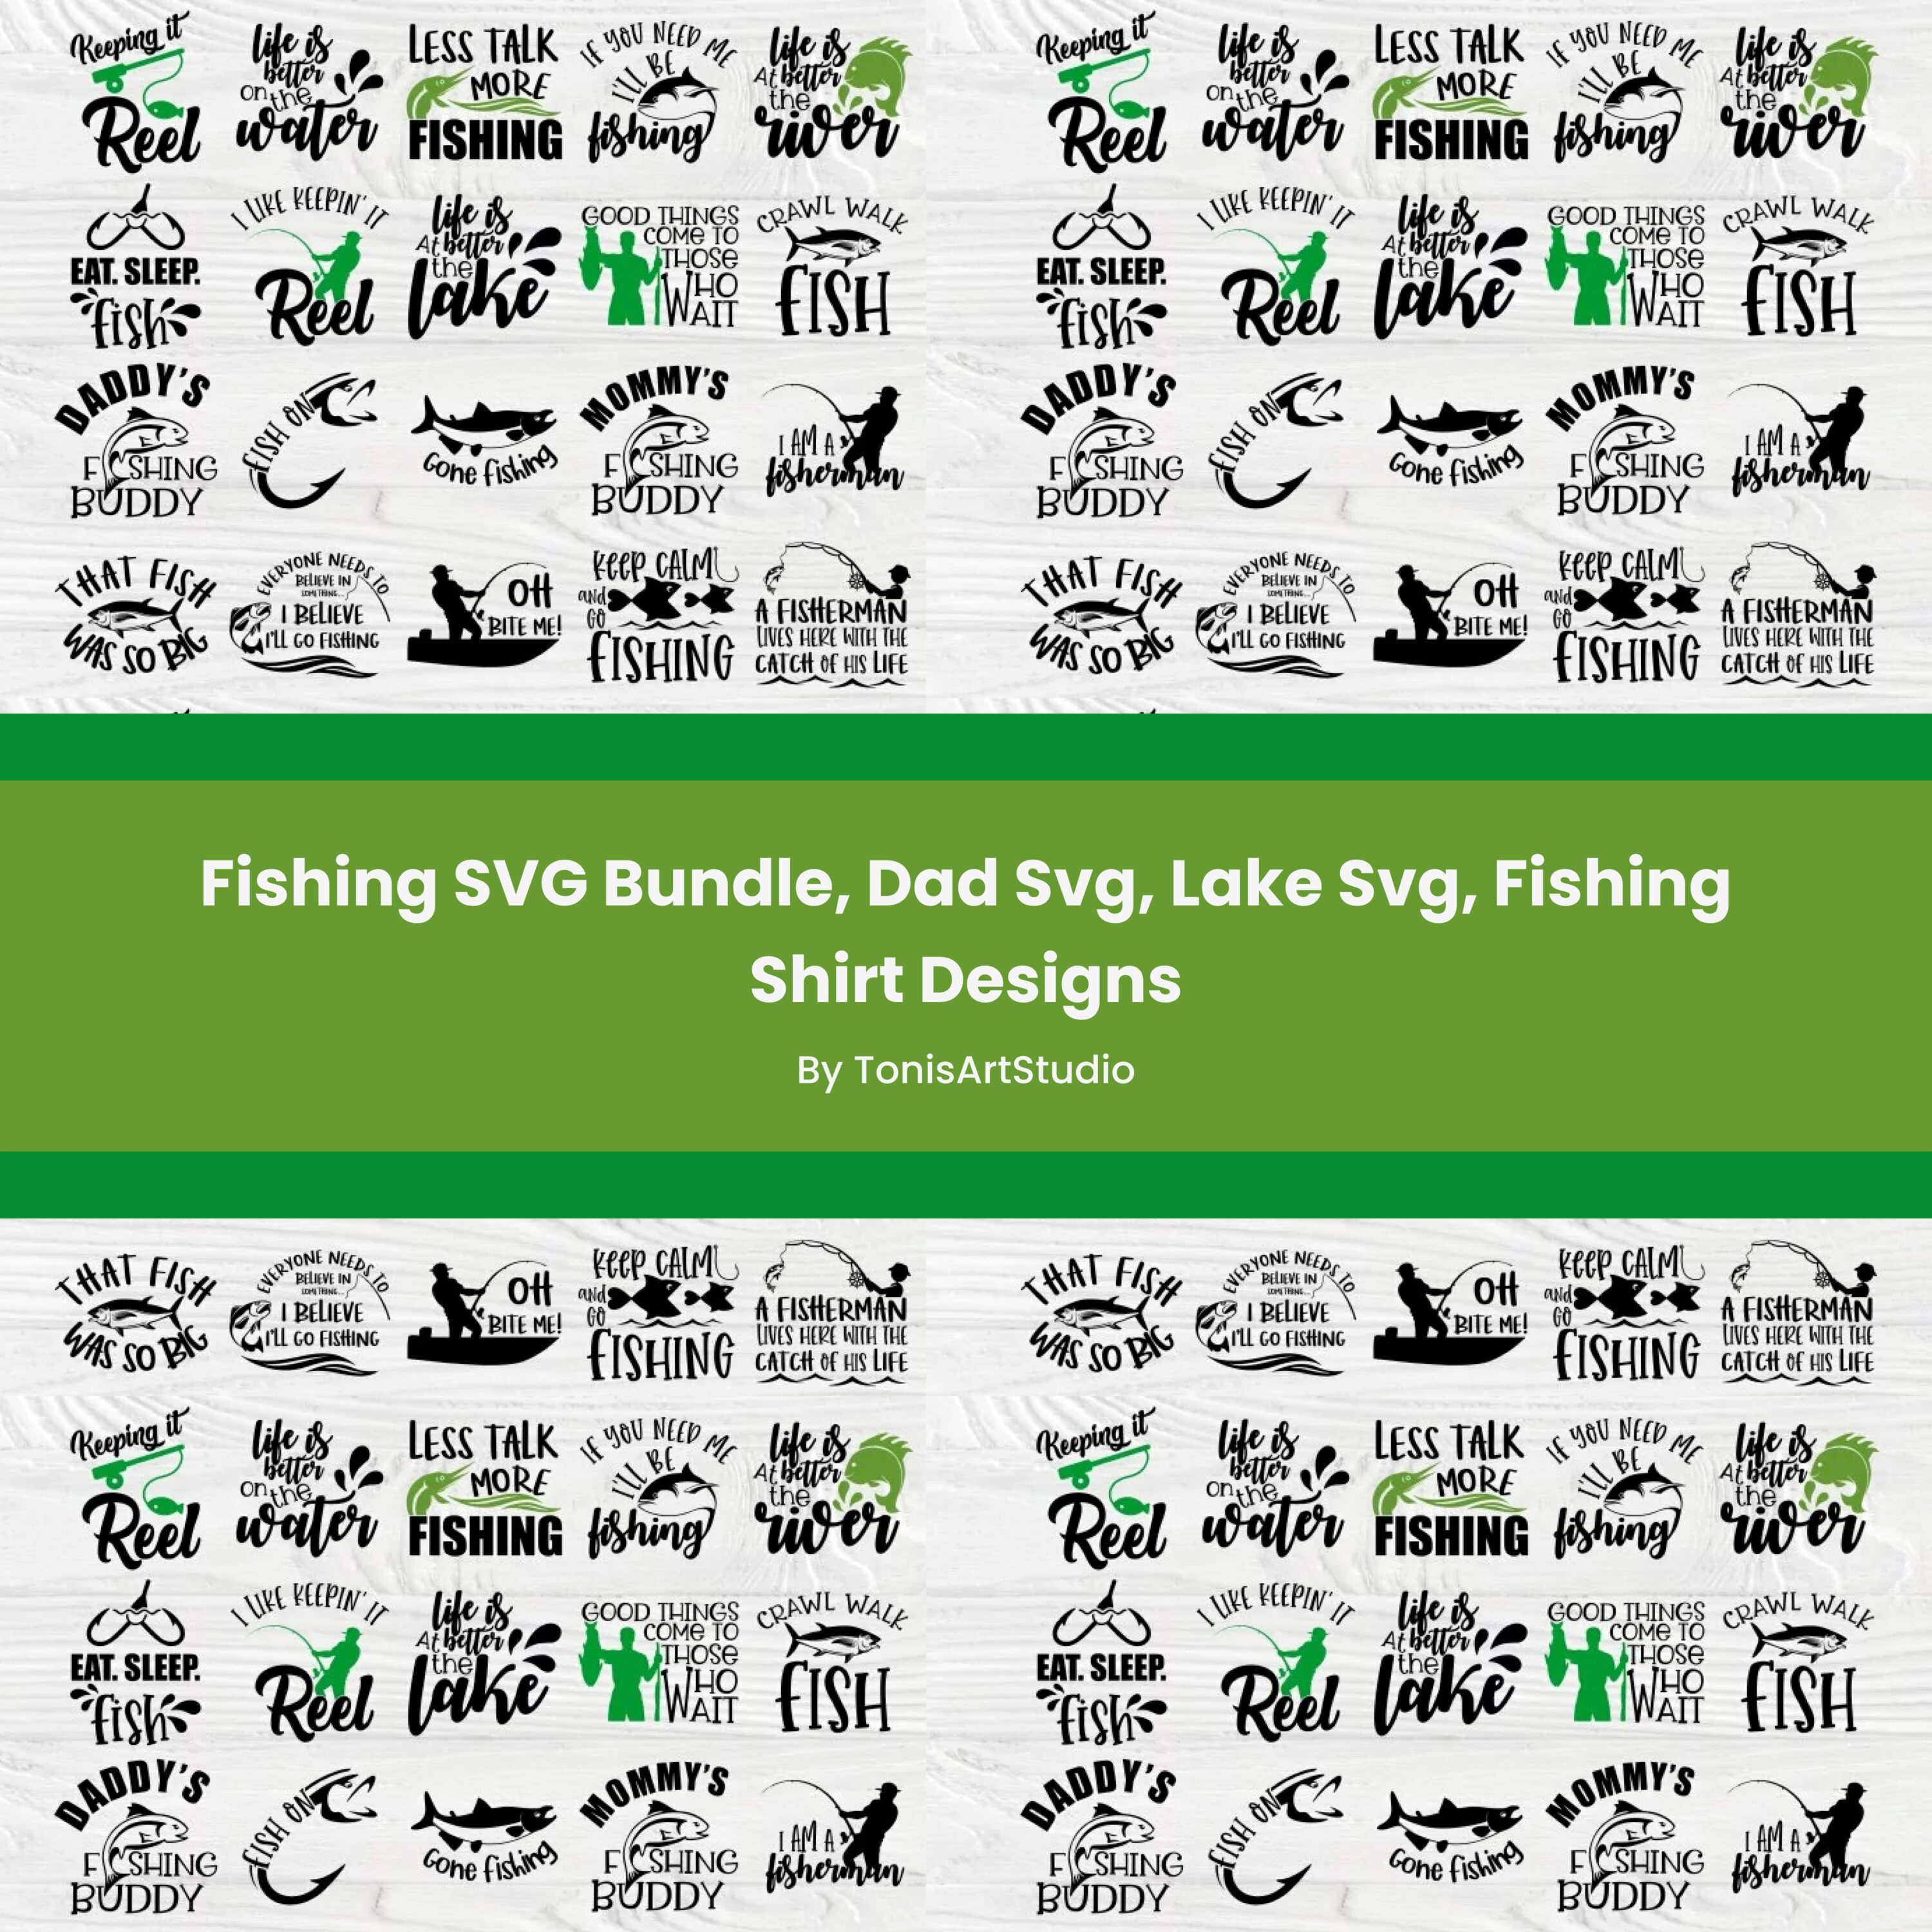 Fishing SVG Bundle - main image preview.